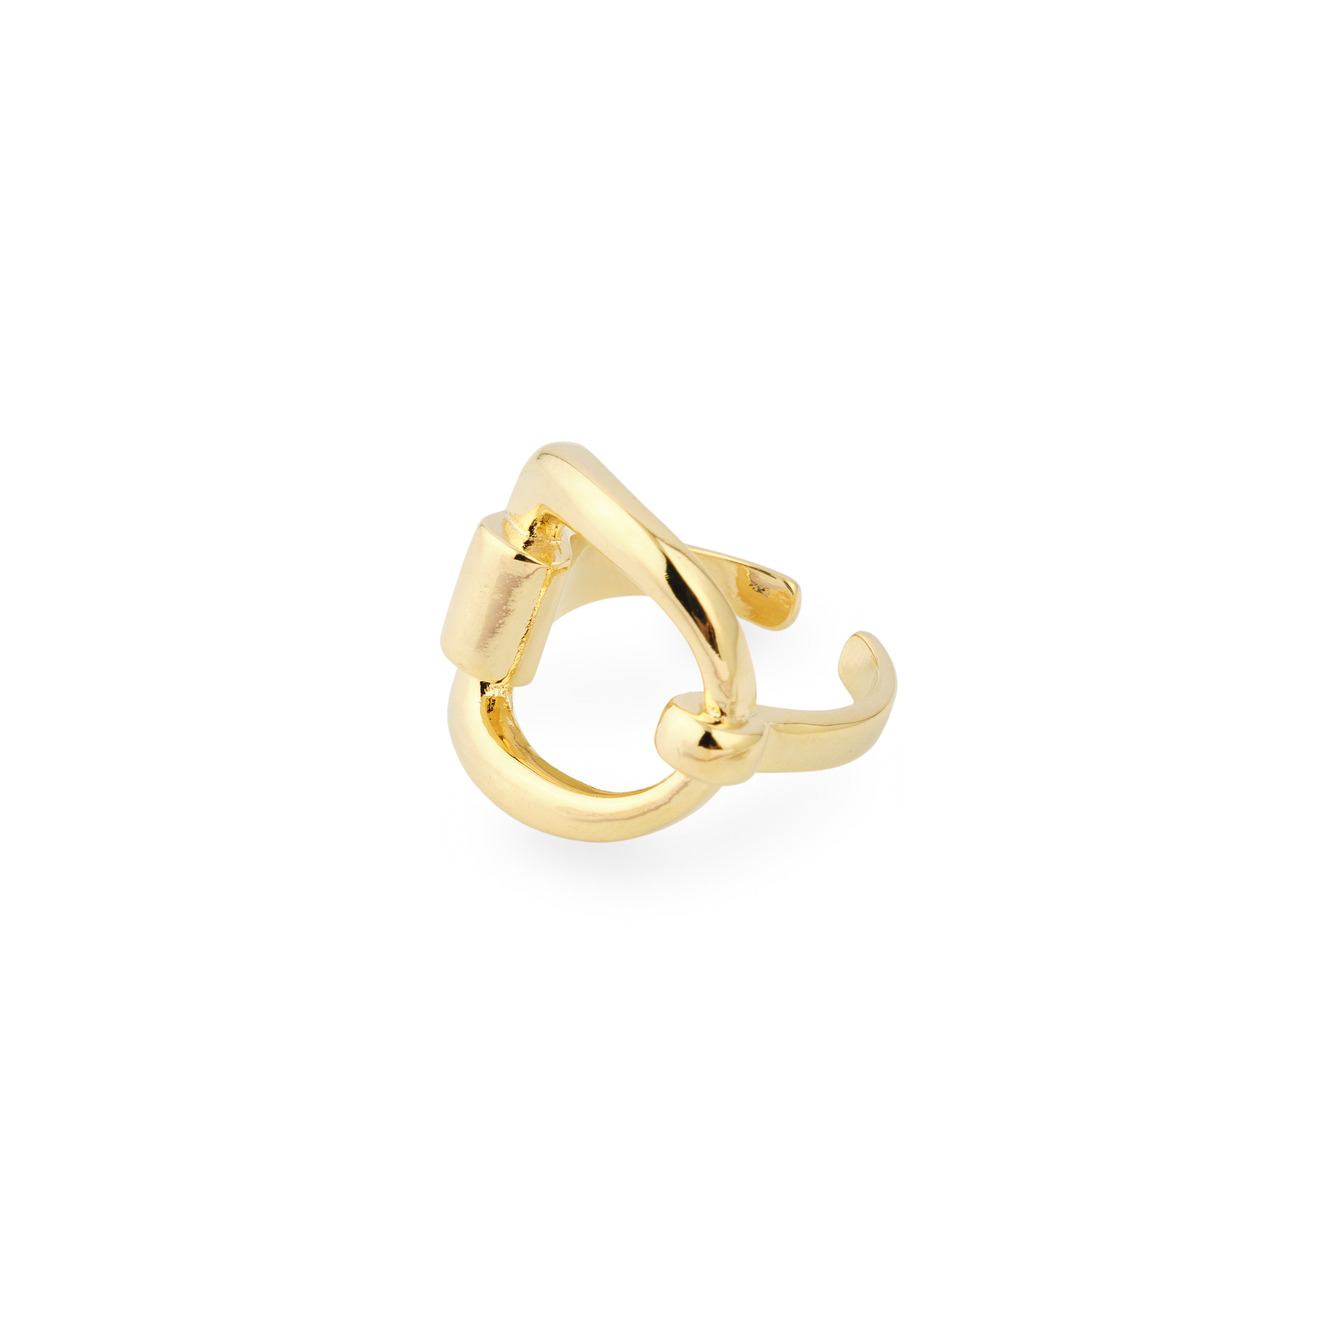 Free Form Jewelry Кольцо золотистое с пряжкой free form jewelry золотистое кольцо с жемчужинкой